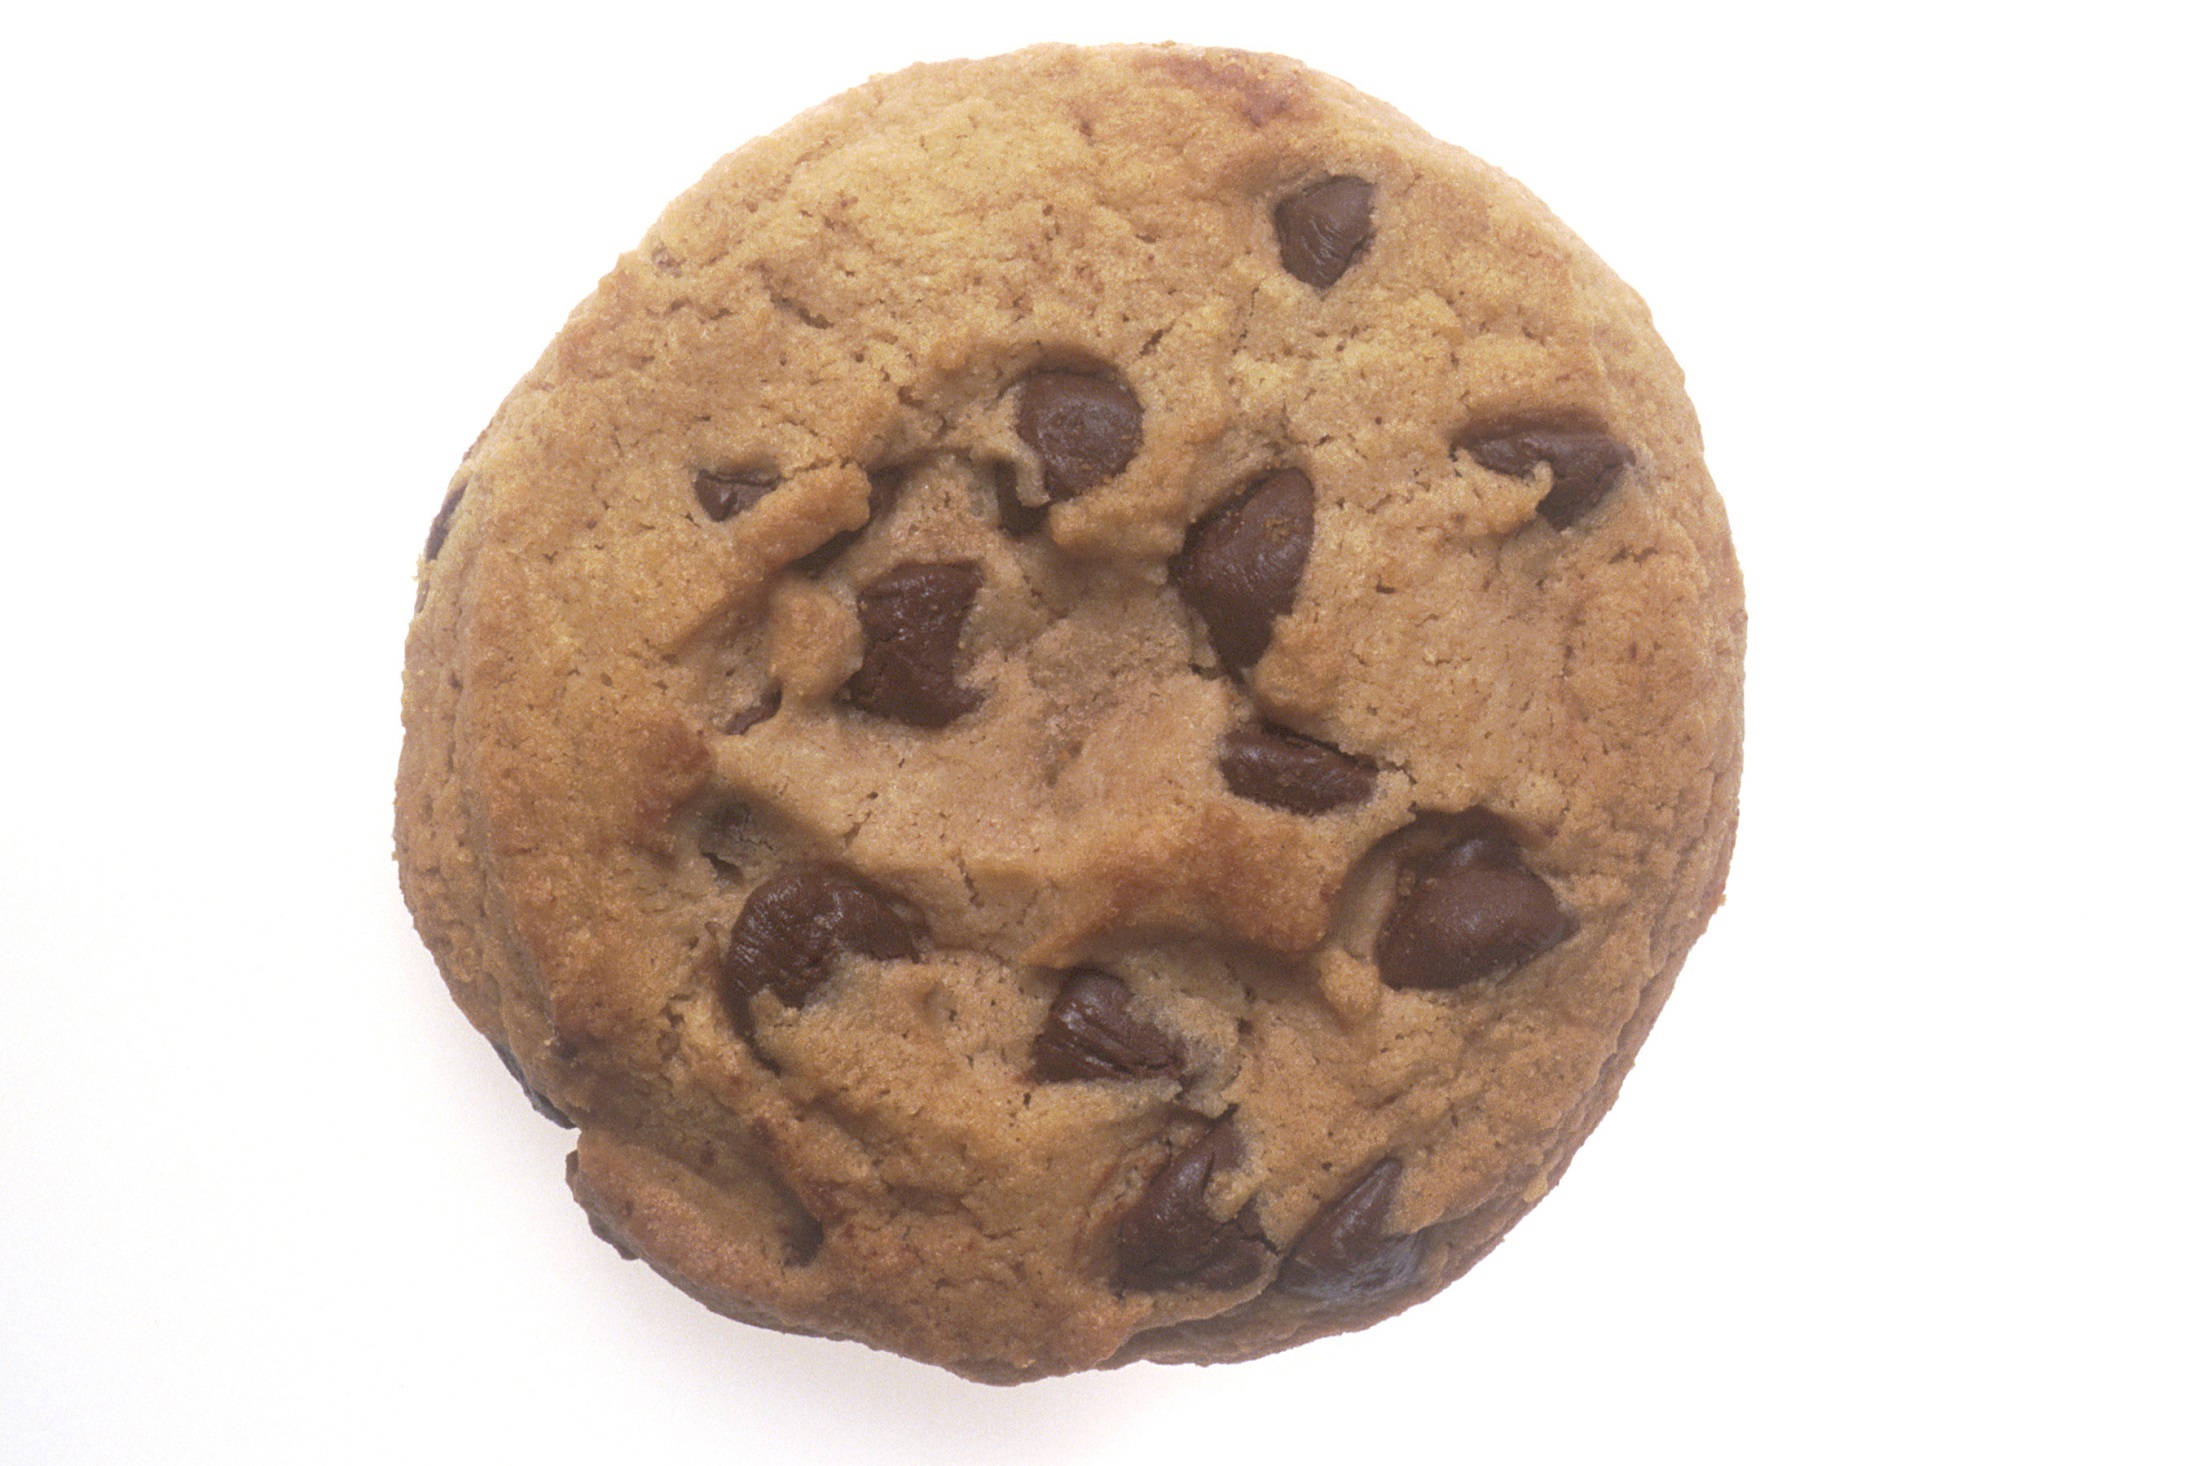 Chocolate chip cookie photo